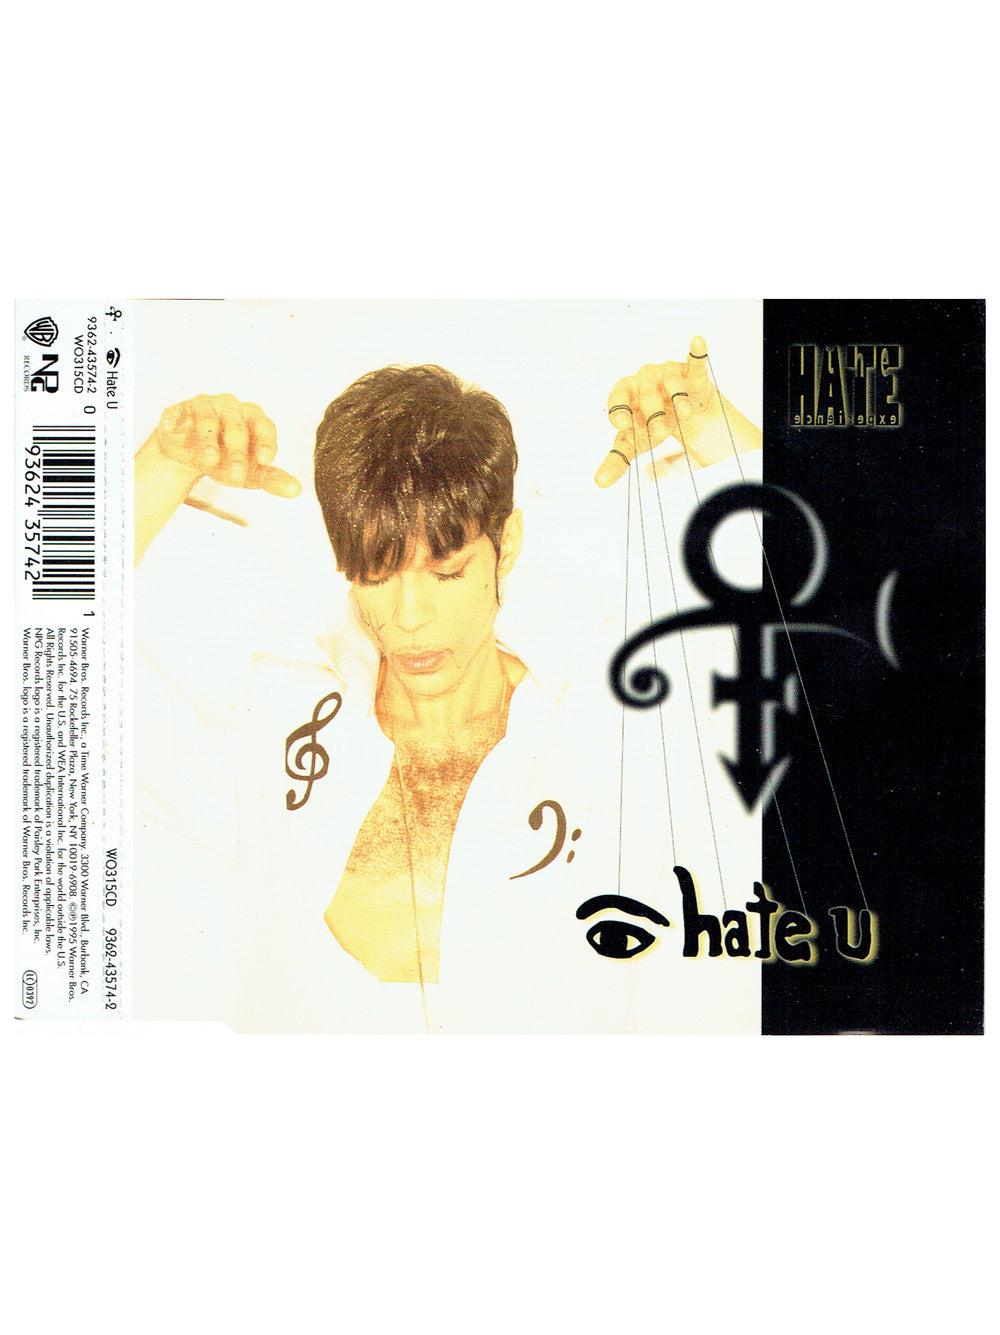 Prince I Hate U Maxi CD Single 1995 Original UK Release Stunning 5 Tracks